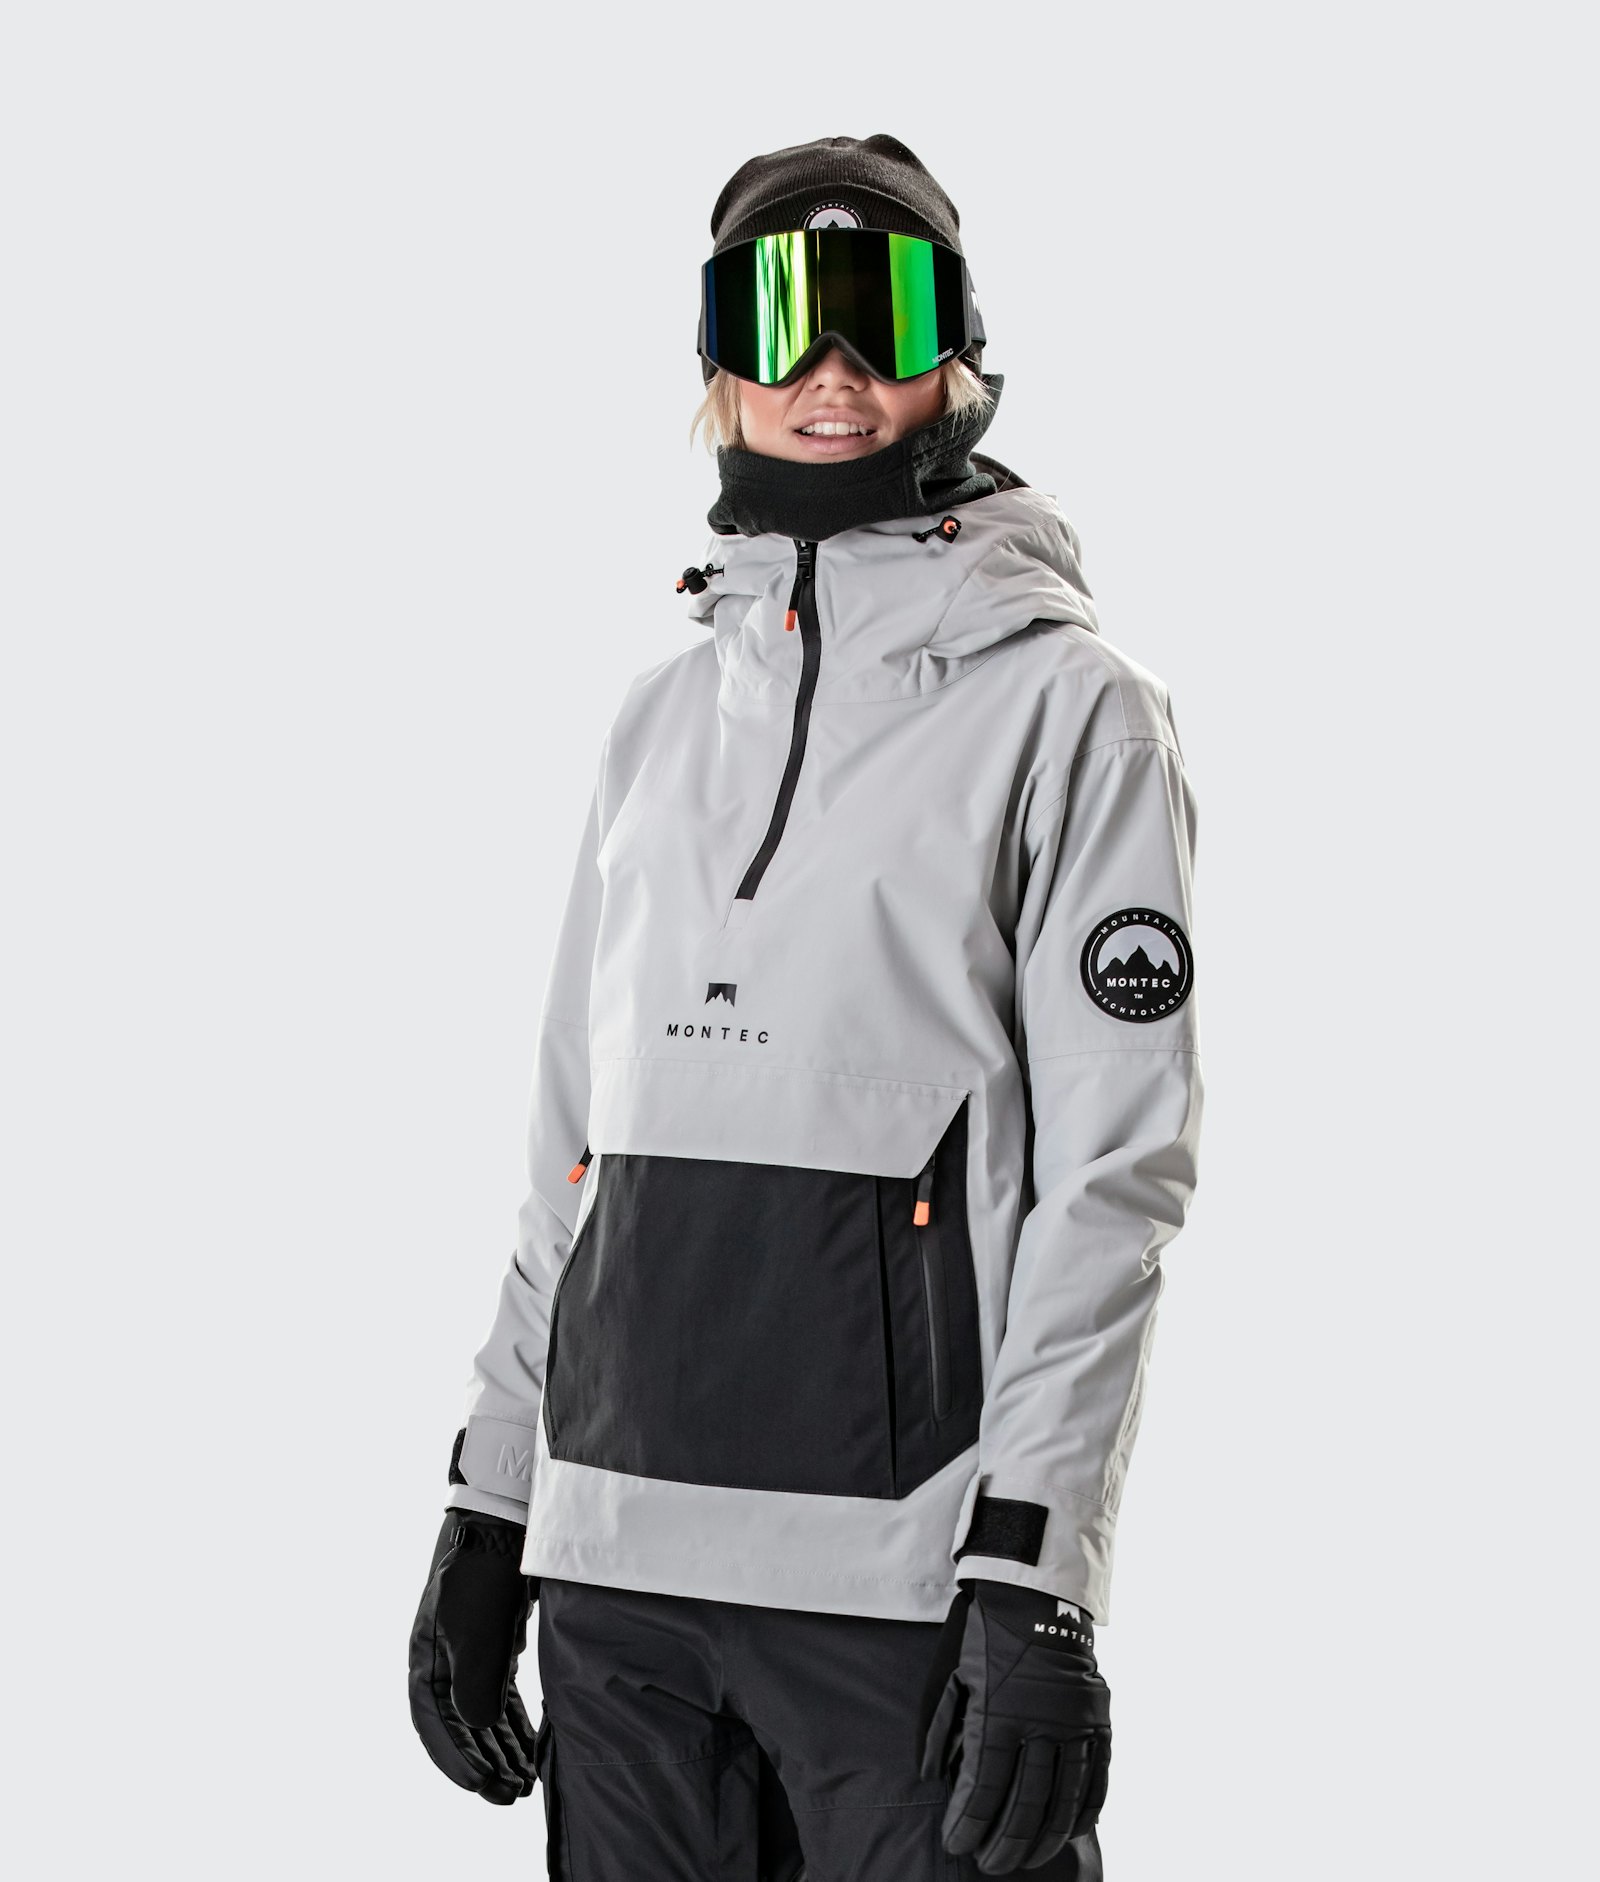 Typhoon W 2020 Ski Jacket Women Light Grey/Black